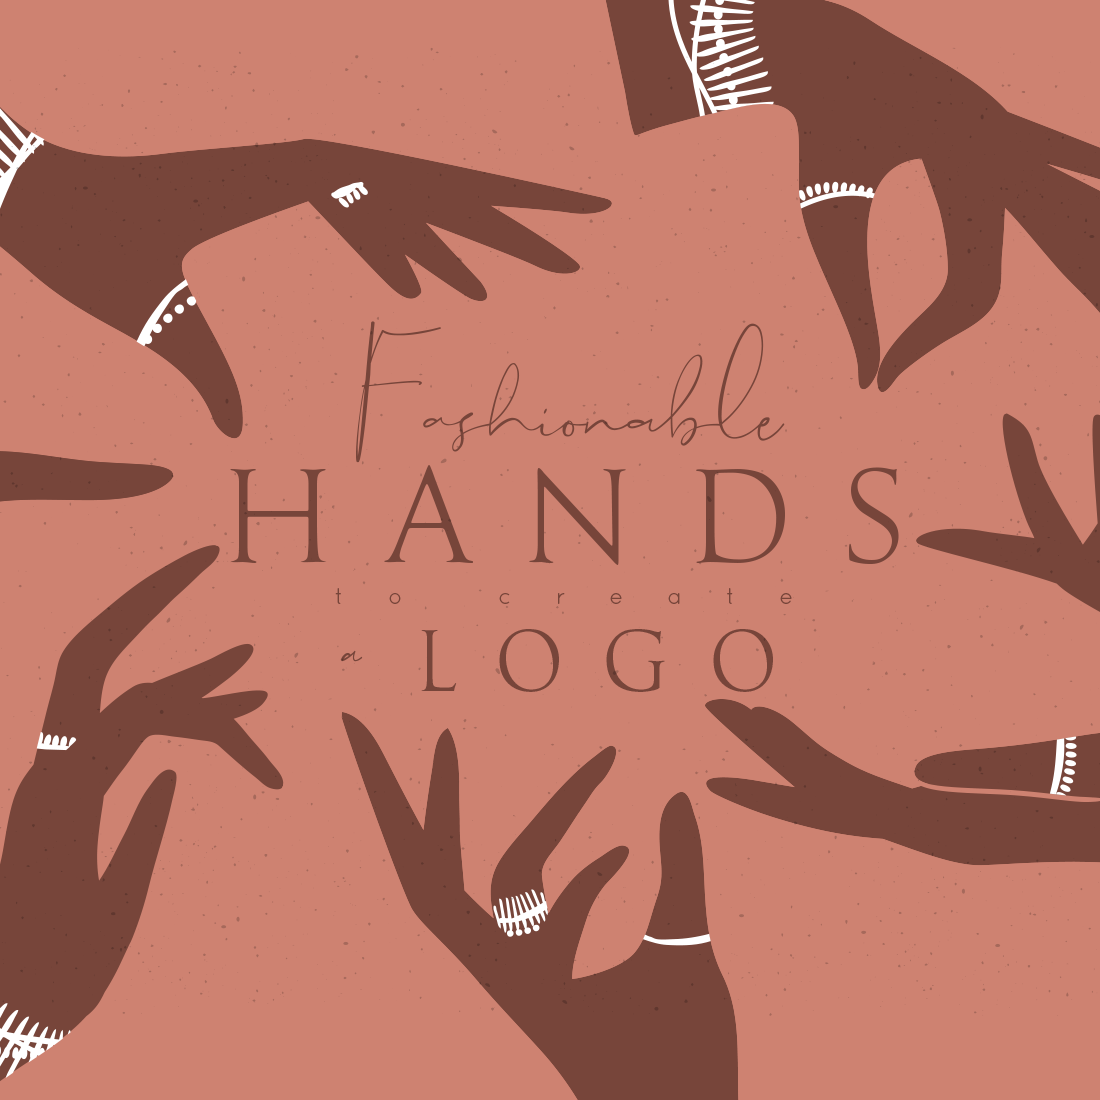 Fashionable Hands Logo Maker cover image.